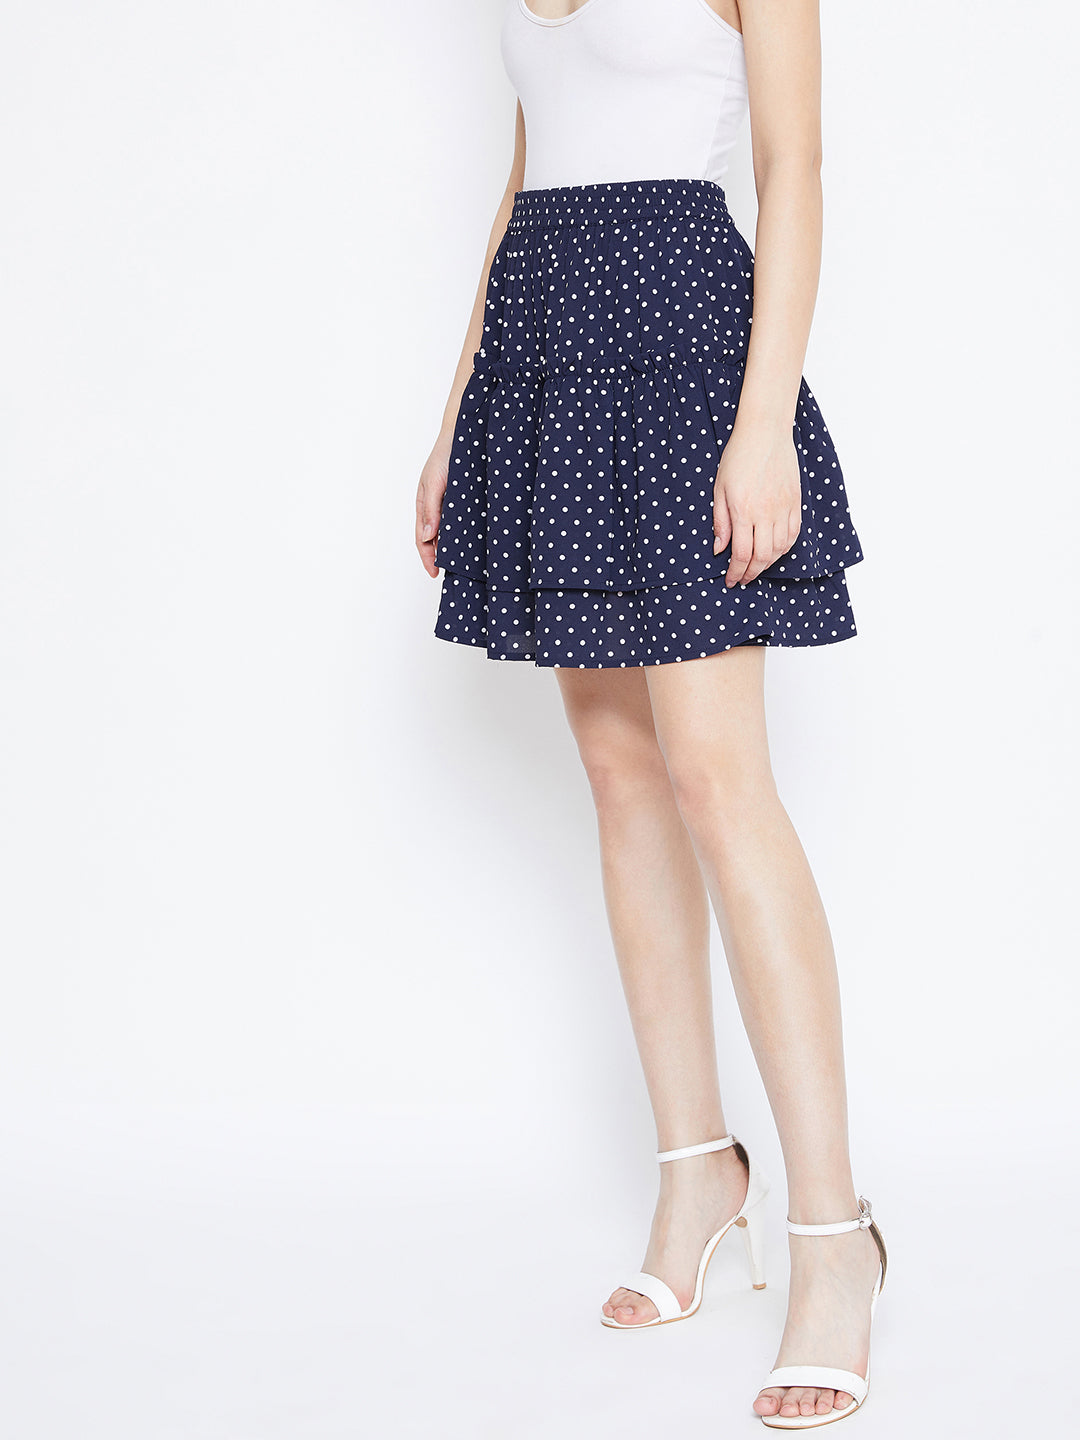 Berrylush Women Navy Blue Polka Dot Print Layered Slip-On Mini Skirt